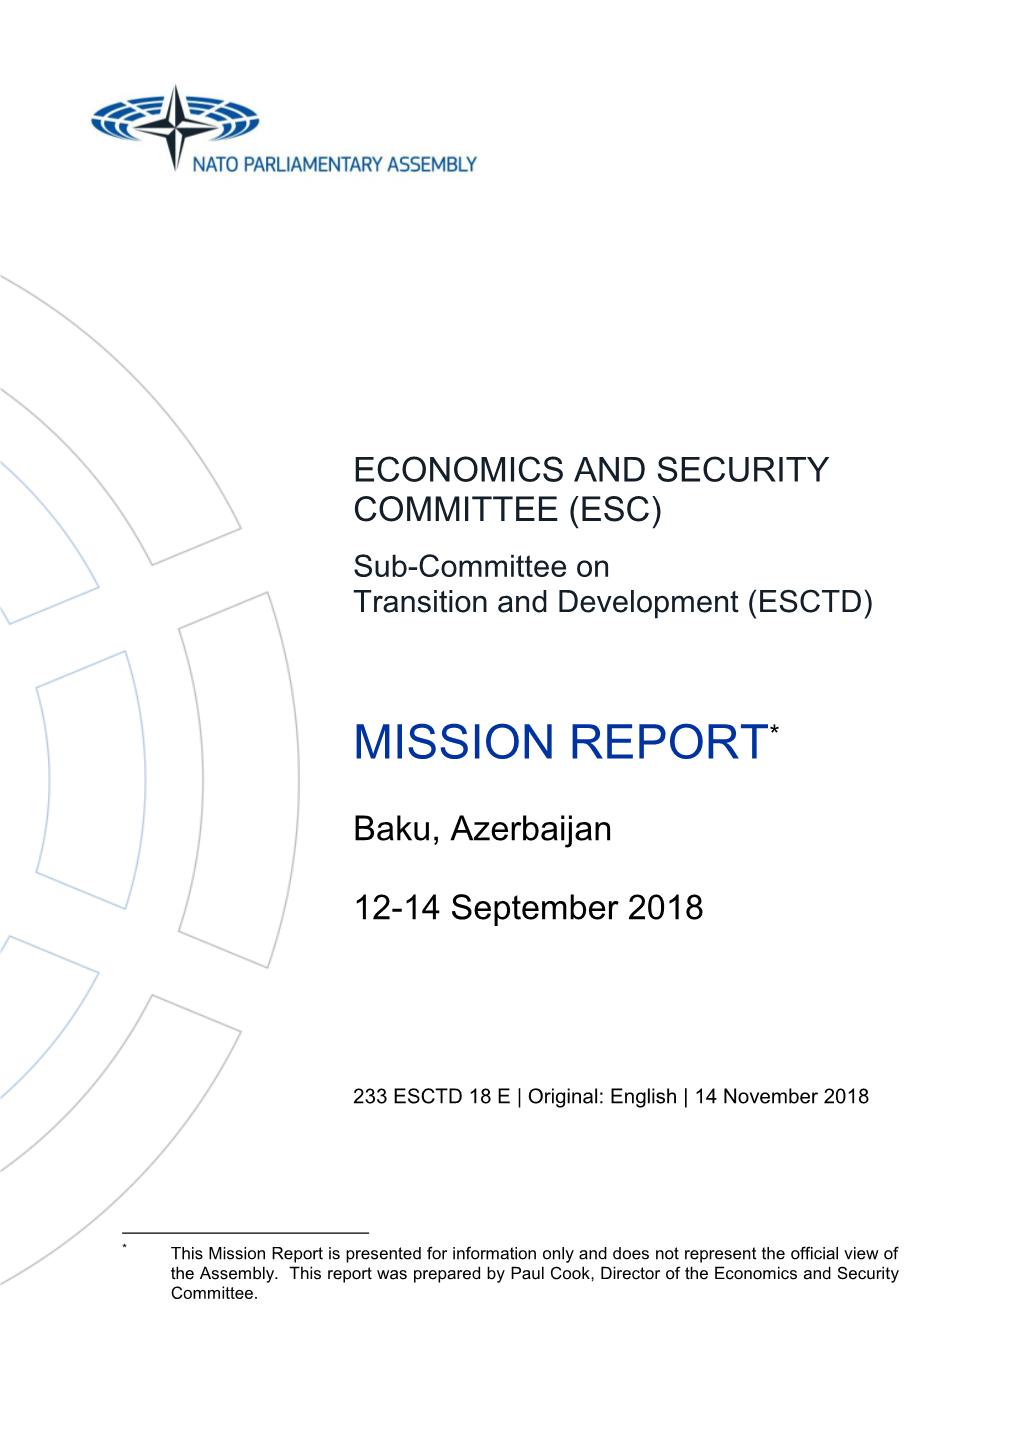 Mission Report Baku